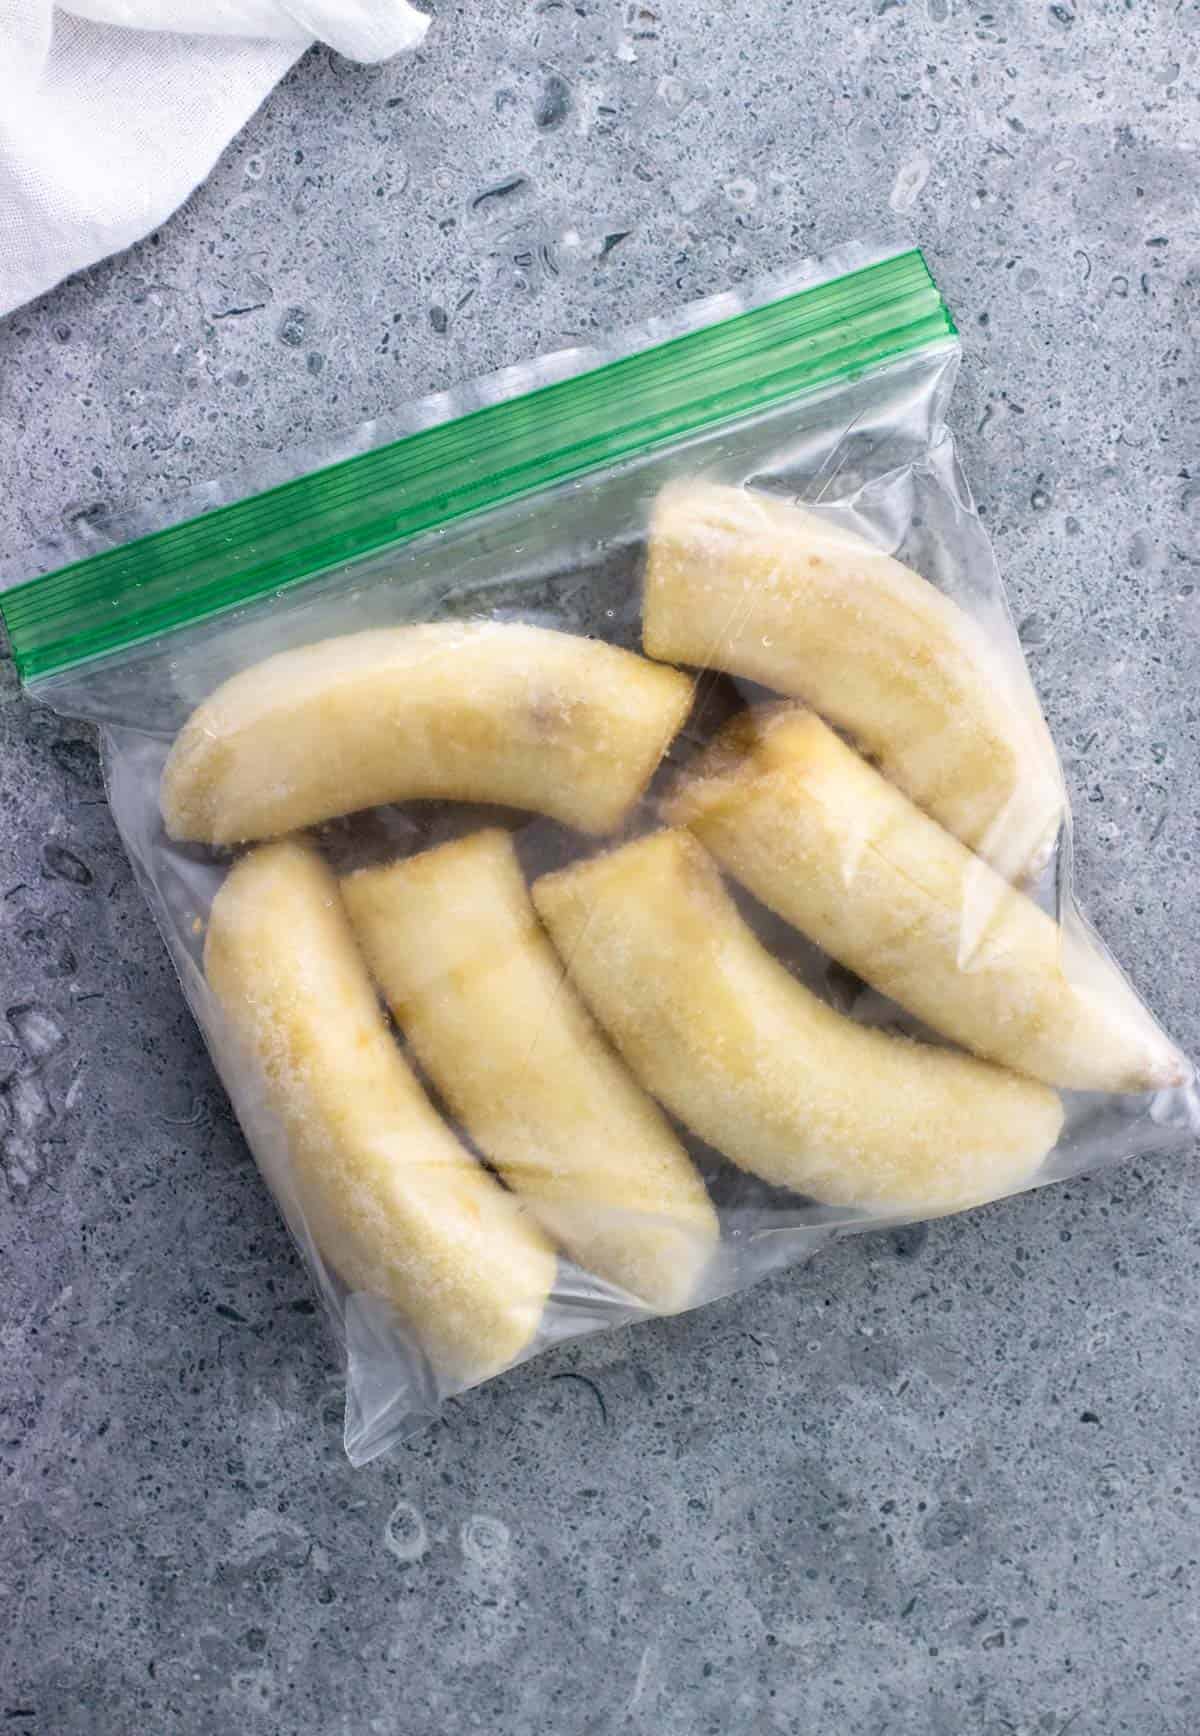 Six fully frozen banana halves sealed in a plastic bag.